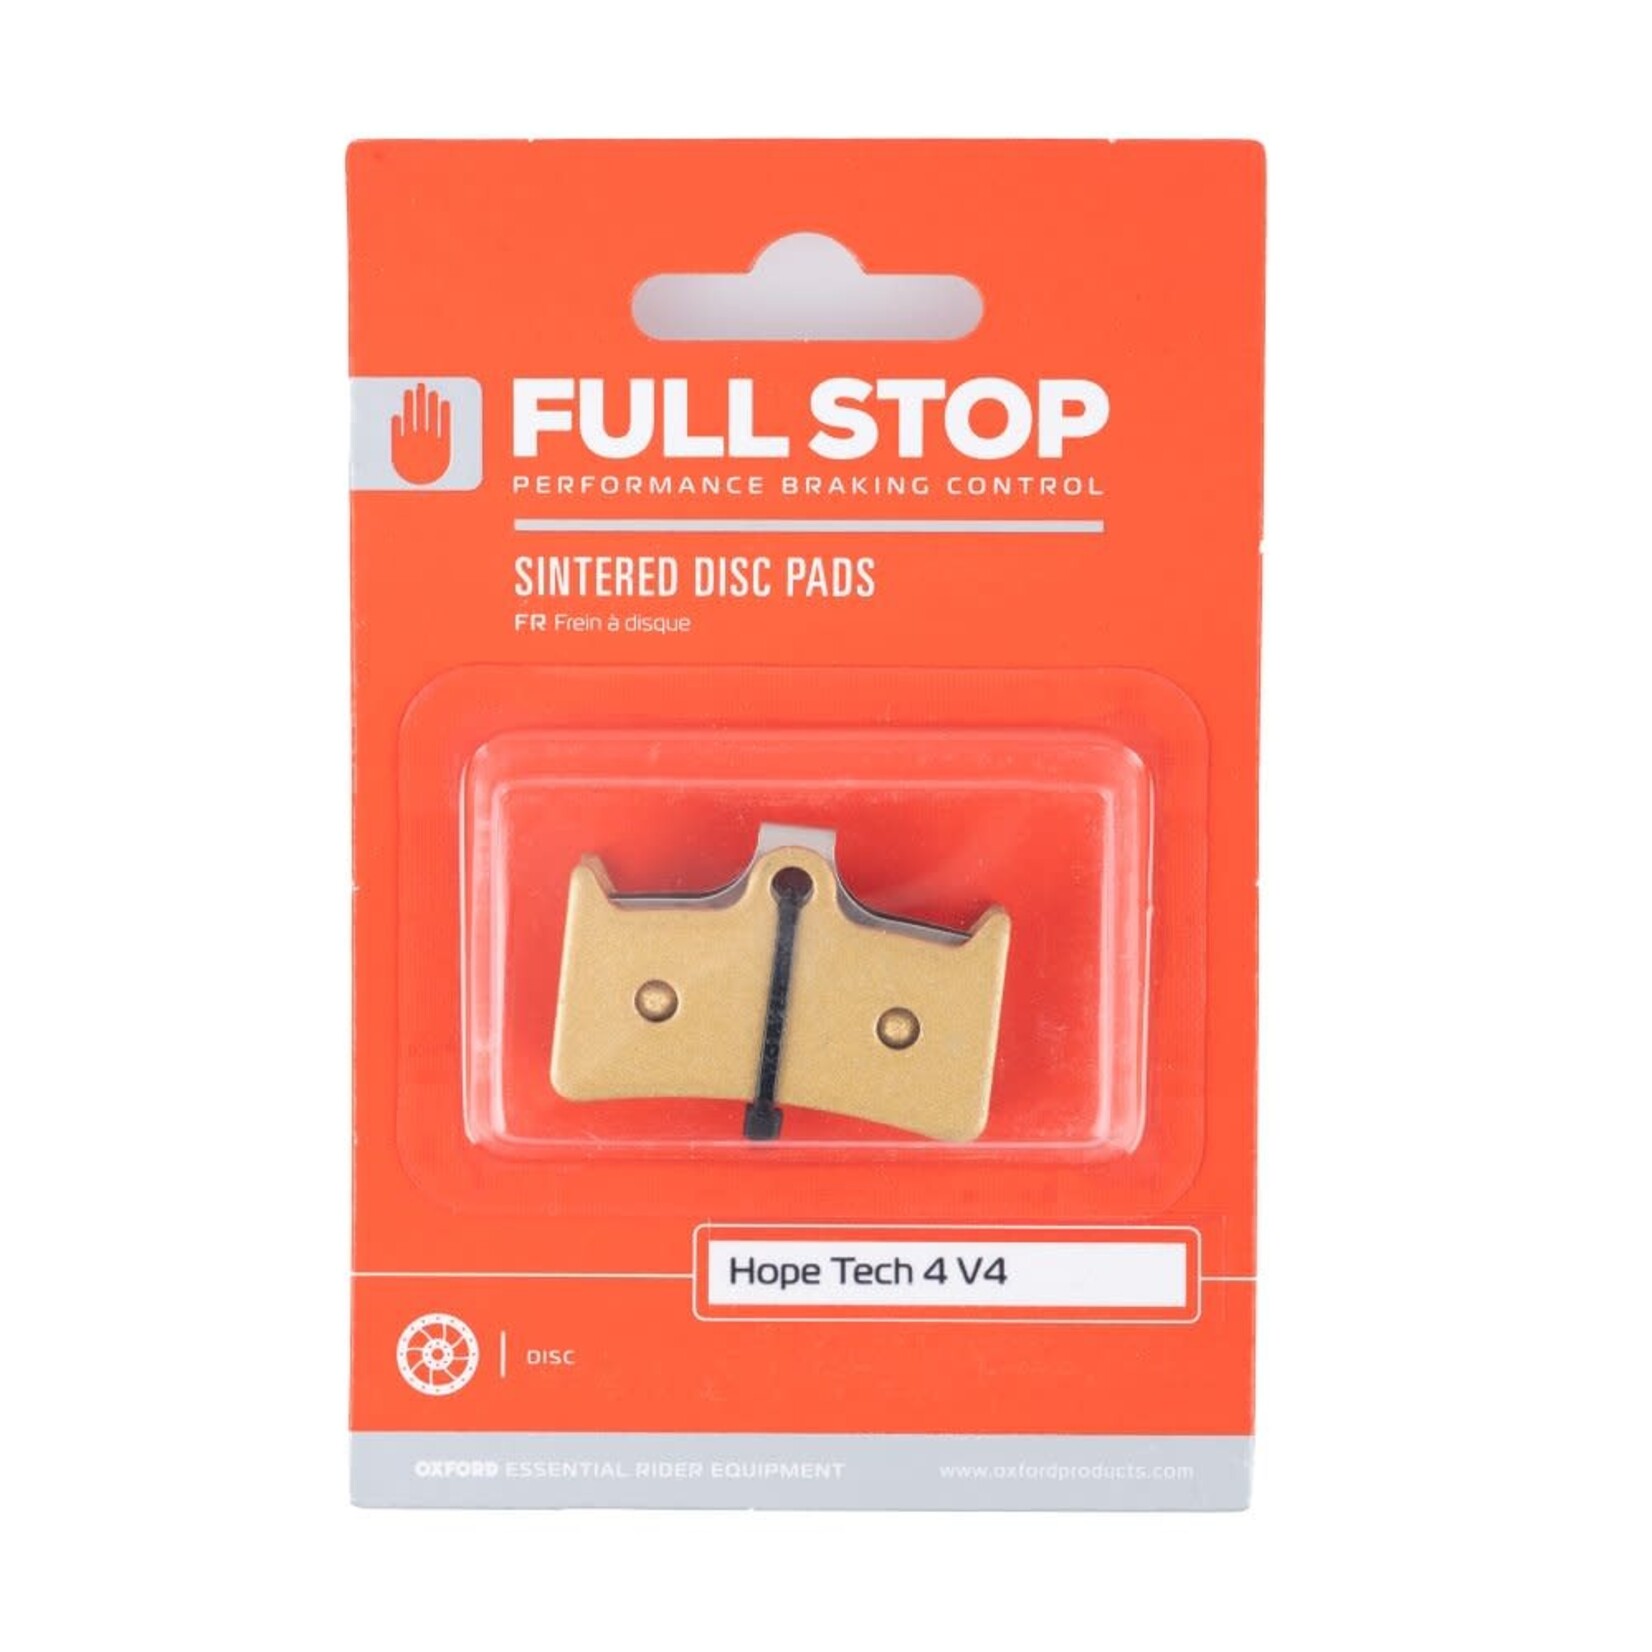 fullstop Fullstop Hope Tech 4 V4 Sintered Disc Pads